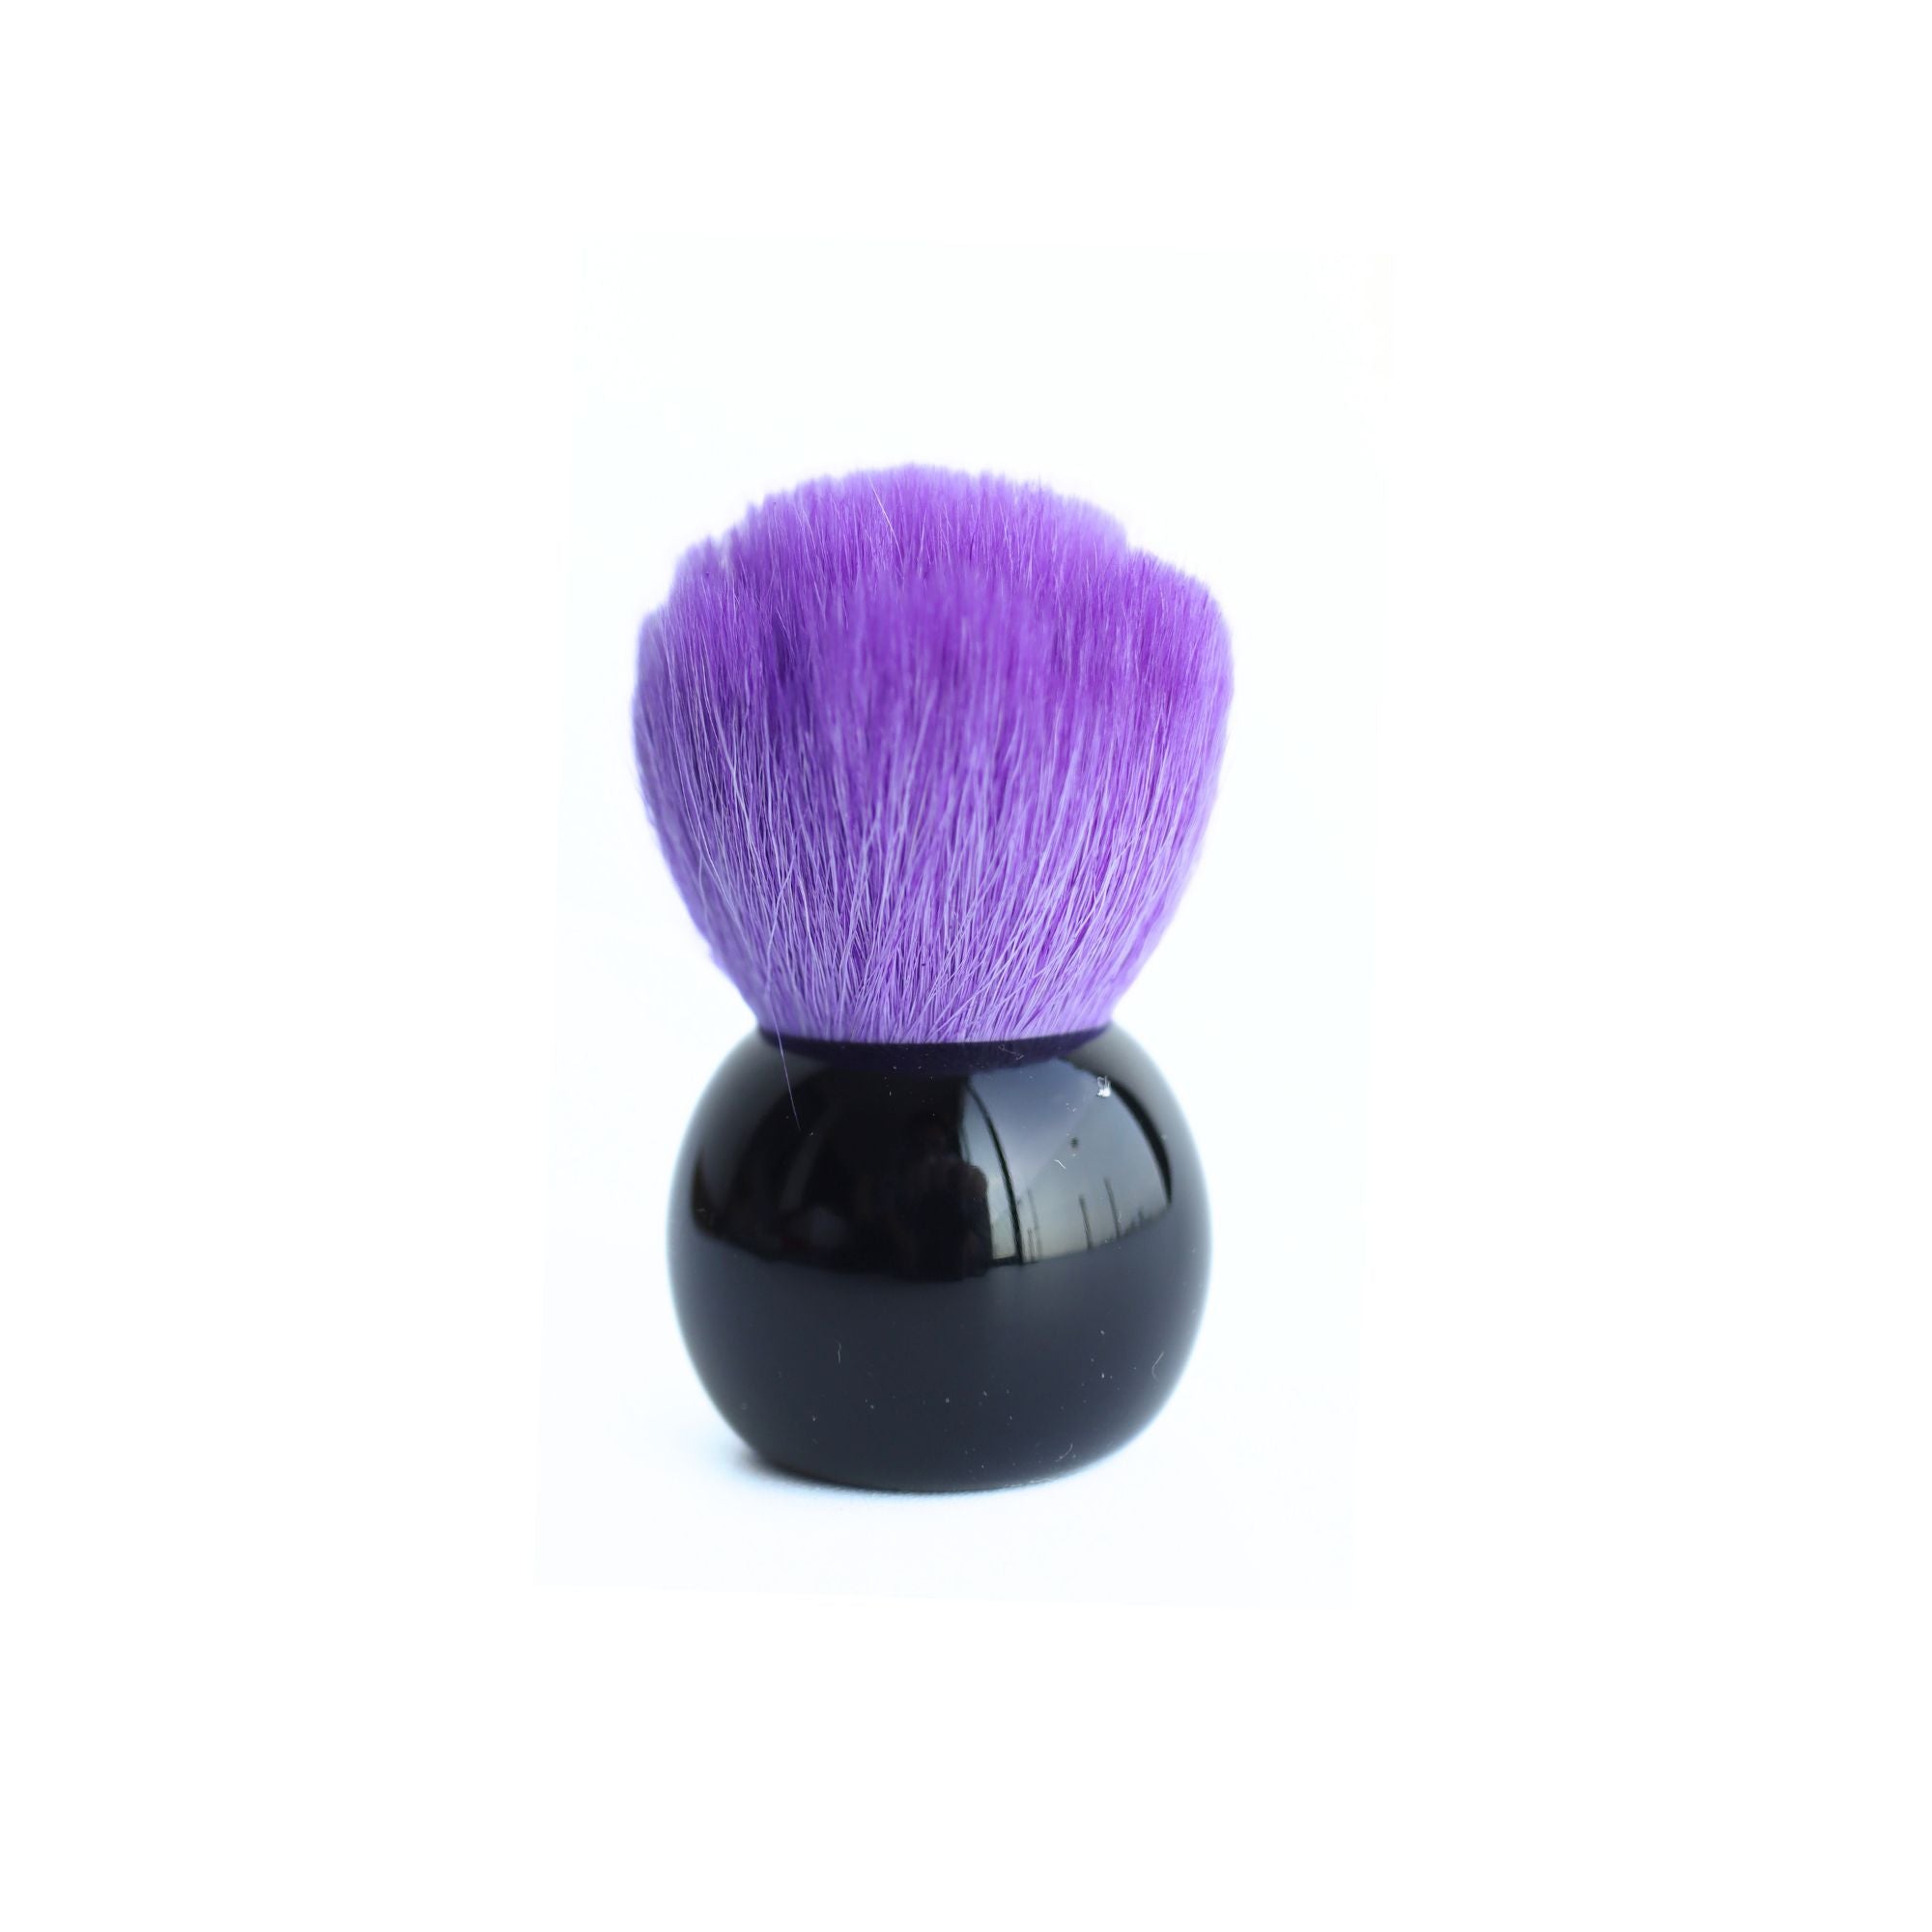 Koyudo Mini Kinoko Rose Powder Brush (MRB-P) - Fude Beauty, Japanese Makeup Brushes